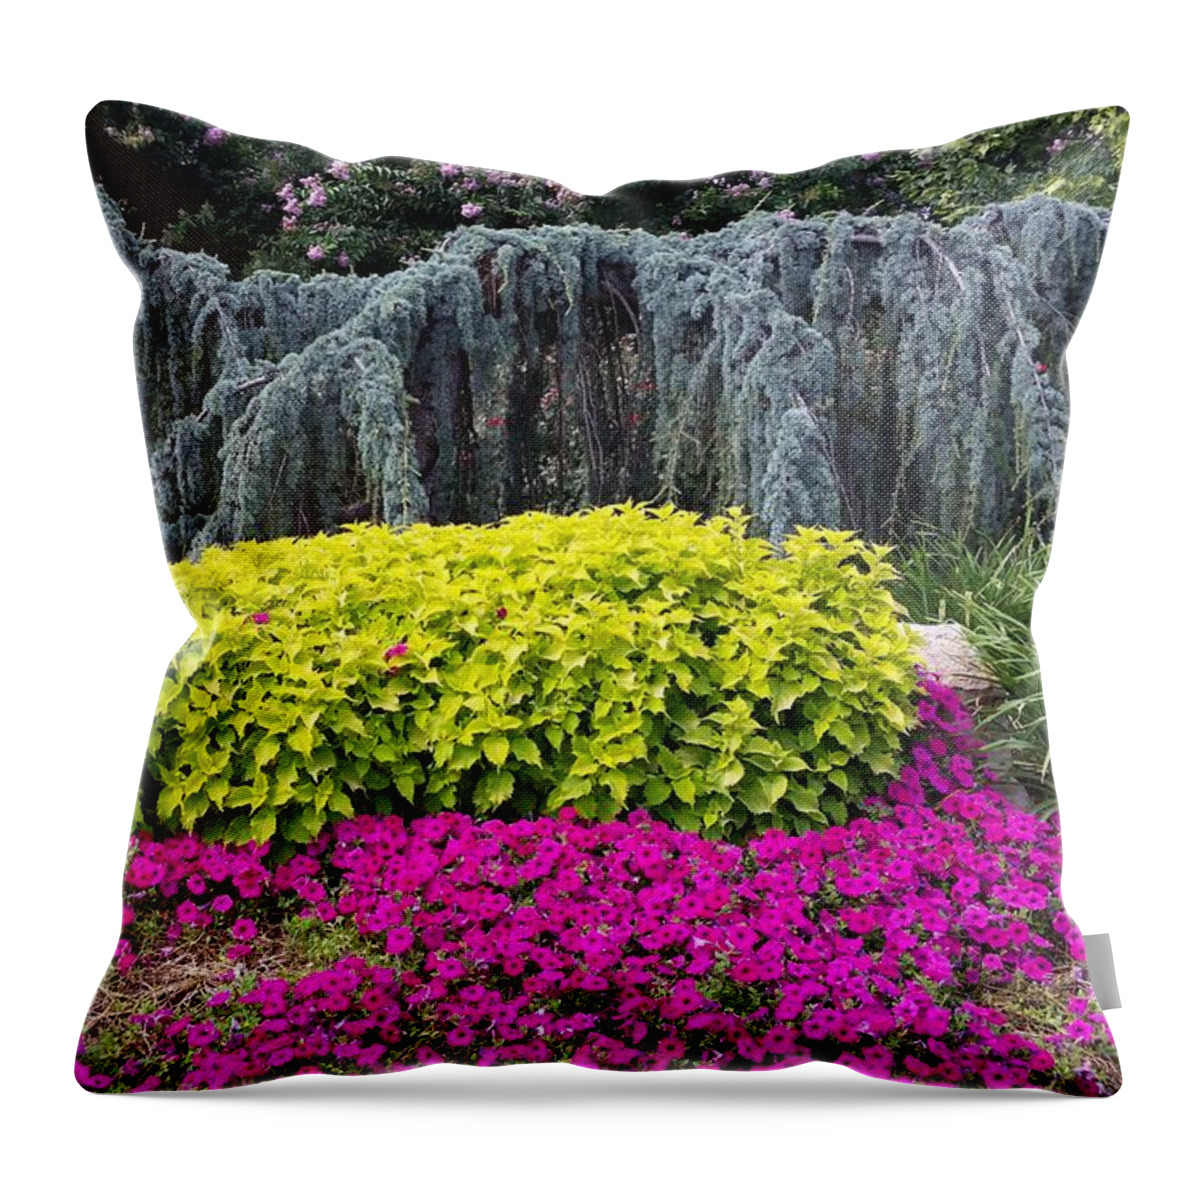 Landscape Throw Pillow featuring the photograph Landscape Elegance by Nancy Ayanna Wyatt